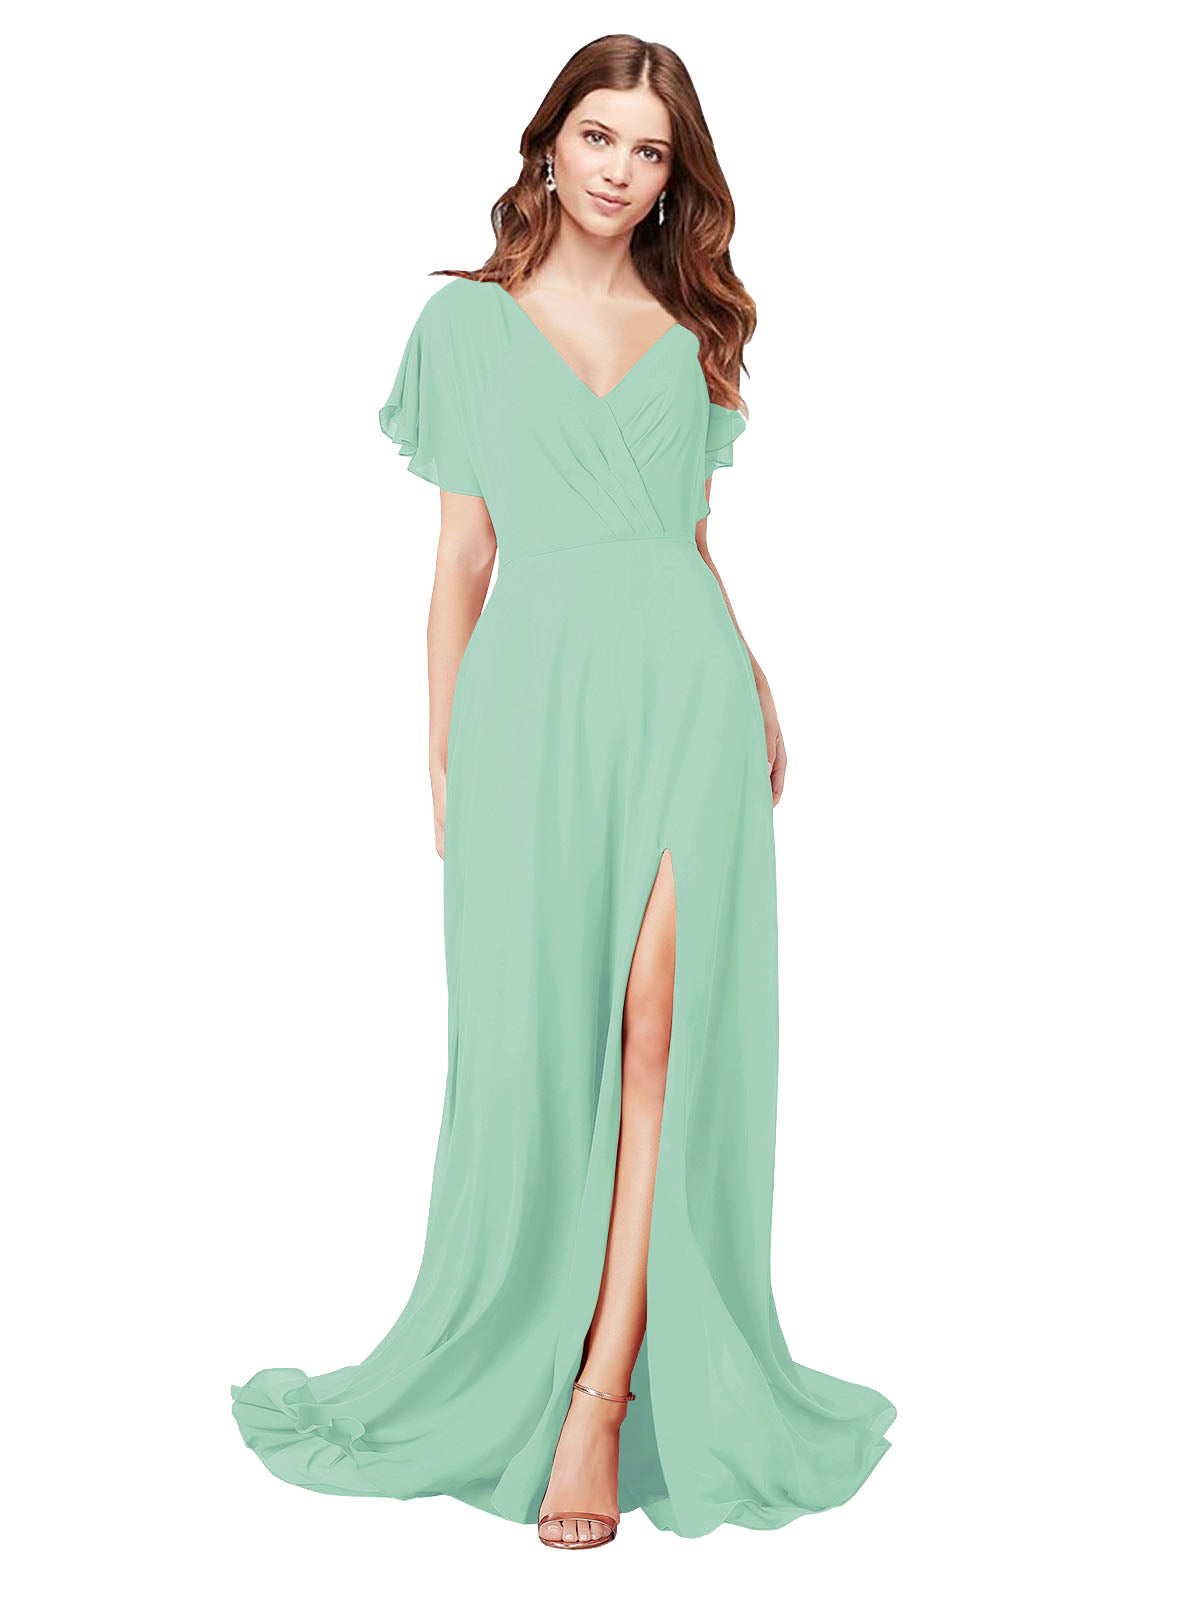 RightBrides Marisol Mint Green A-Line V-Neck Cap Sleeves Long Bridesmaid Dress